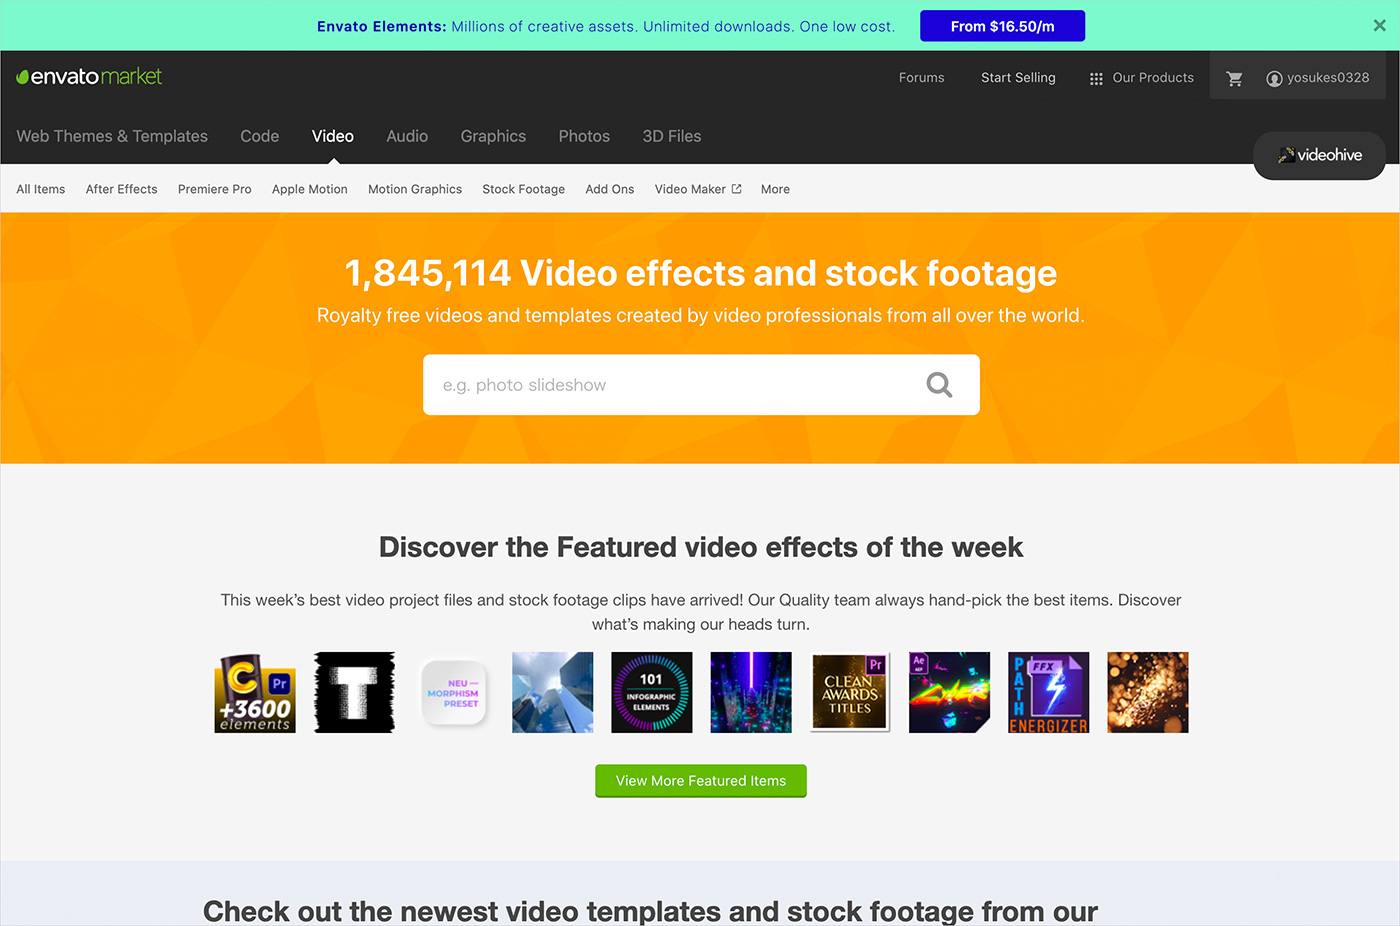 envato market | Video effects and stock footageウェブサイトの画面キャプチャ画像